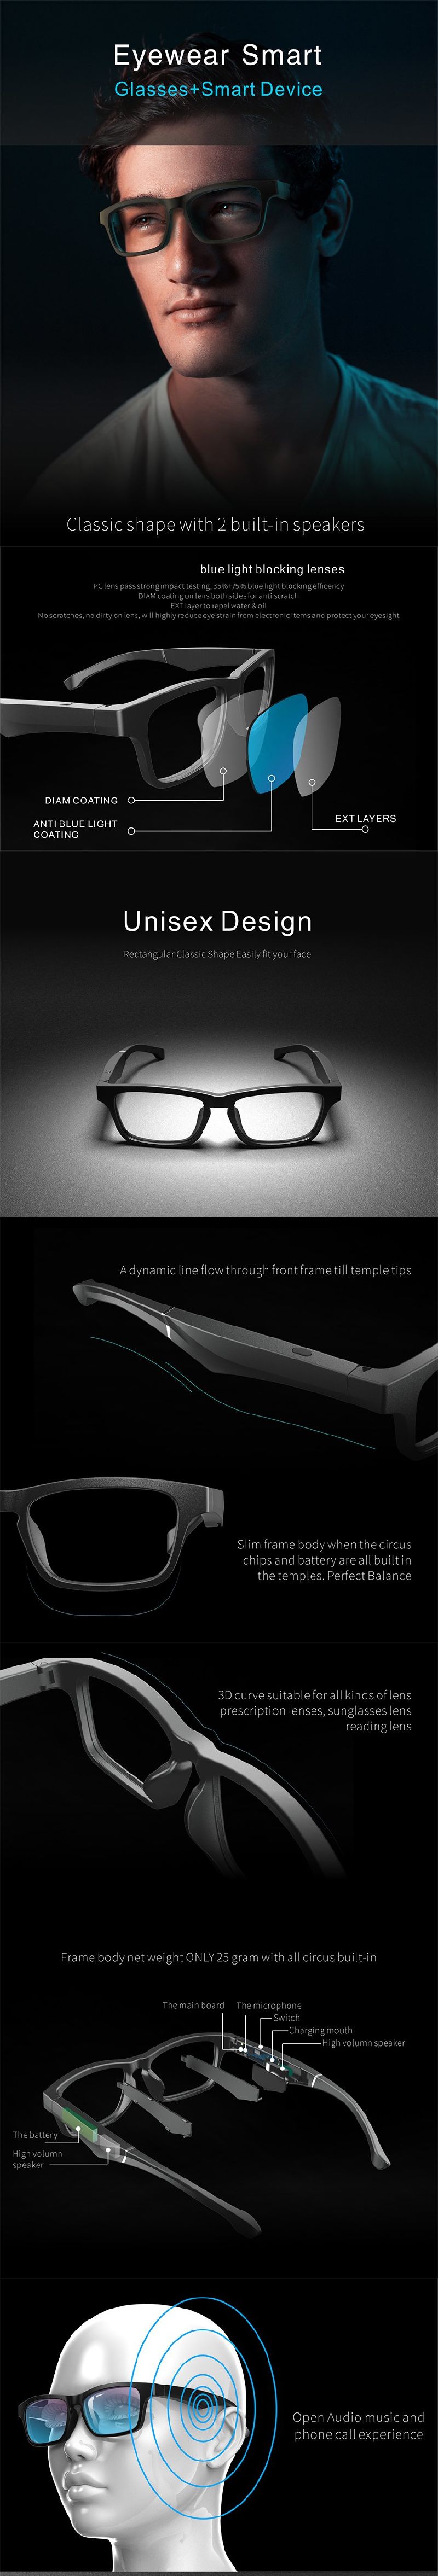 Smart Glasses for Making Phone Calls and Preventing Blue Light